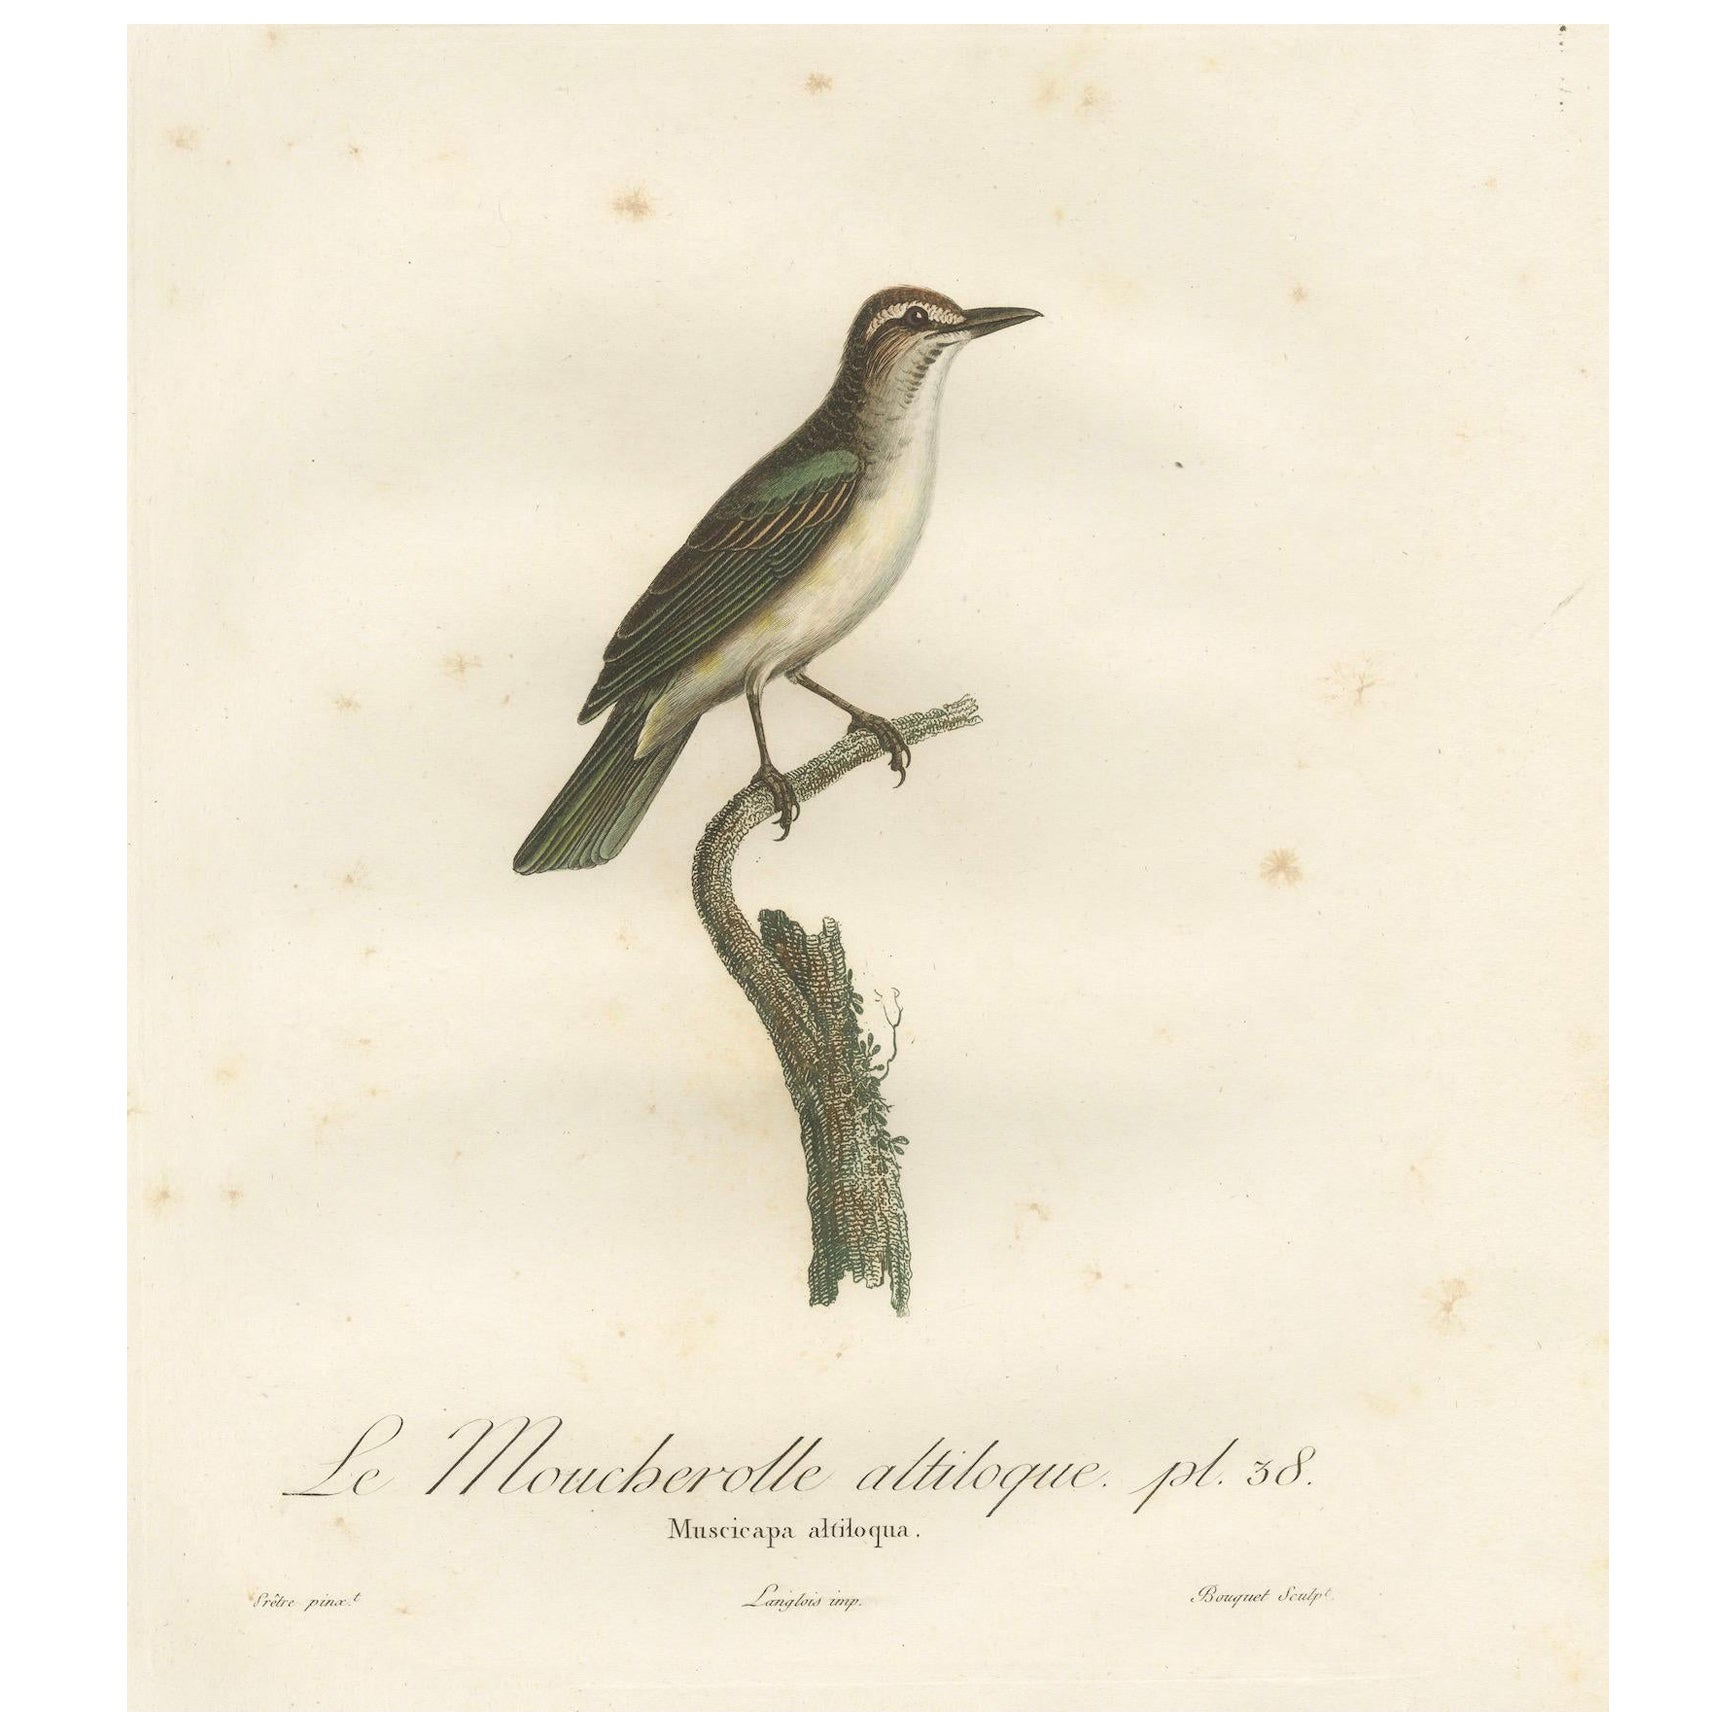 The Black-Whiskered Vireo - Ein großer handkolorierter ornithologischer Druck von 1807 